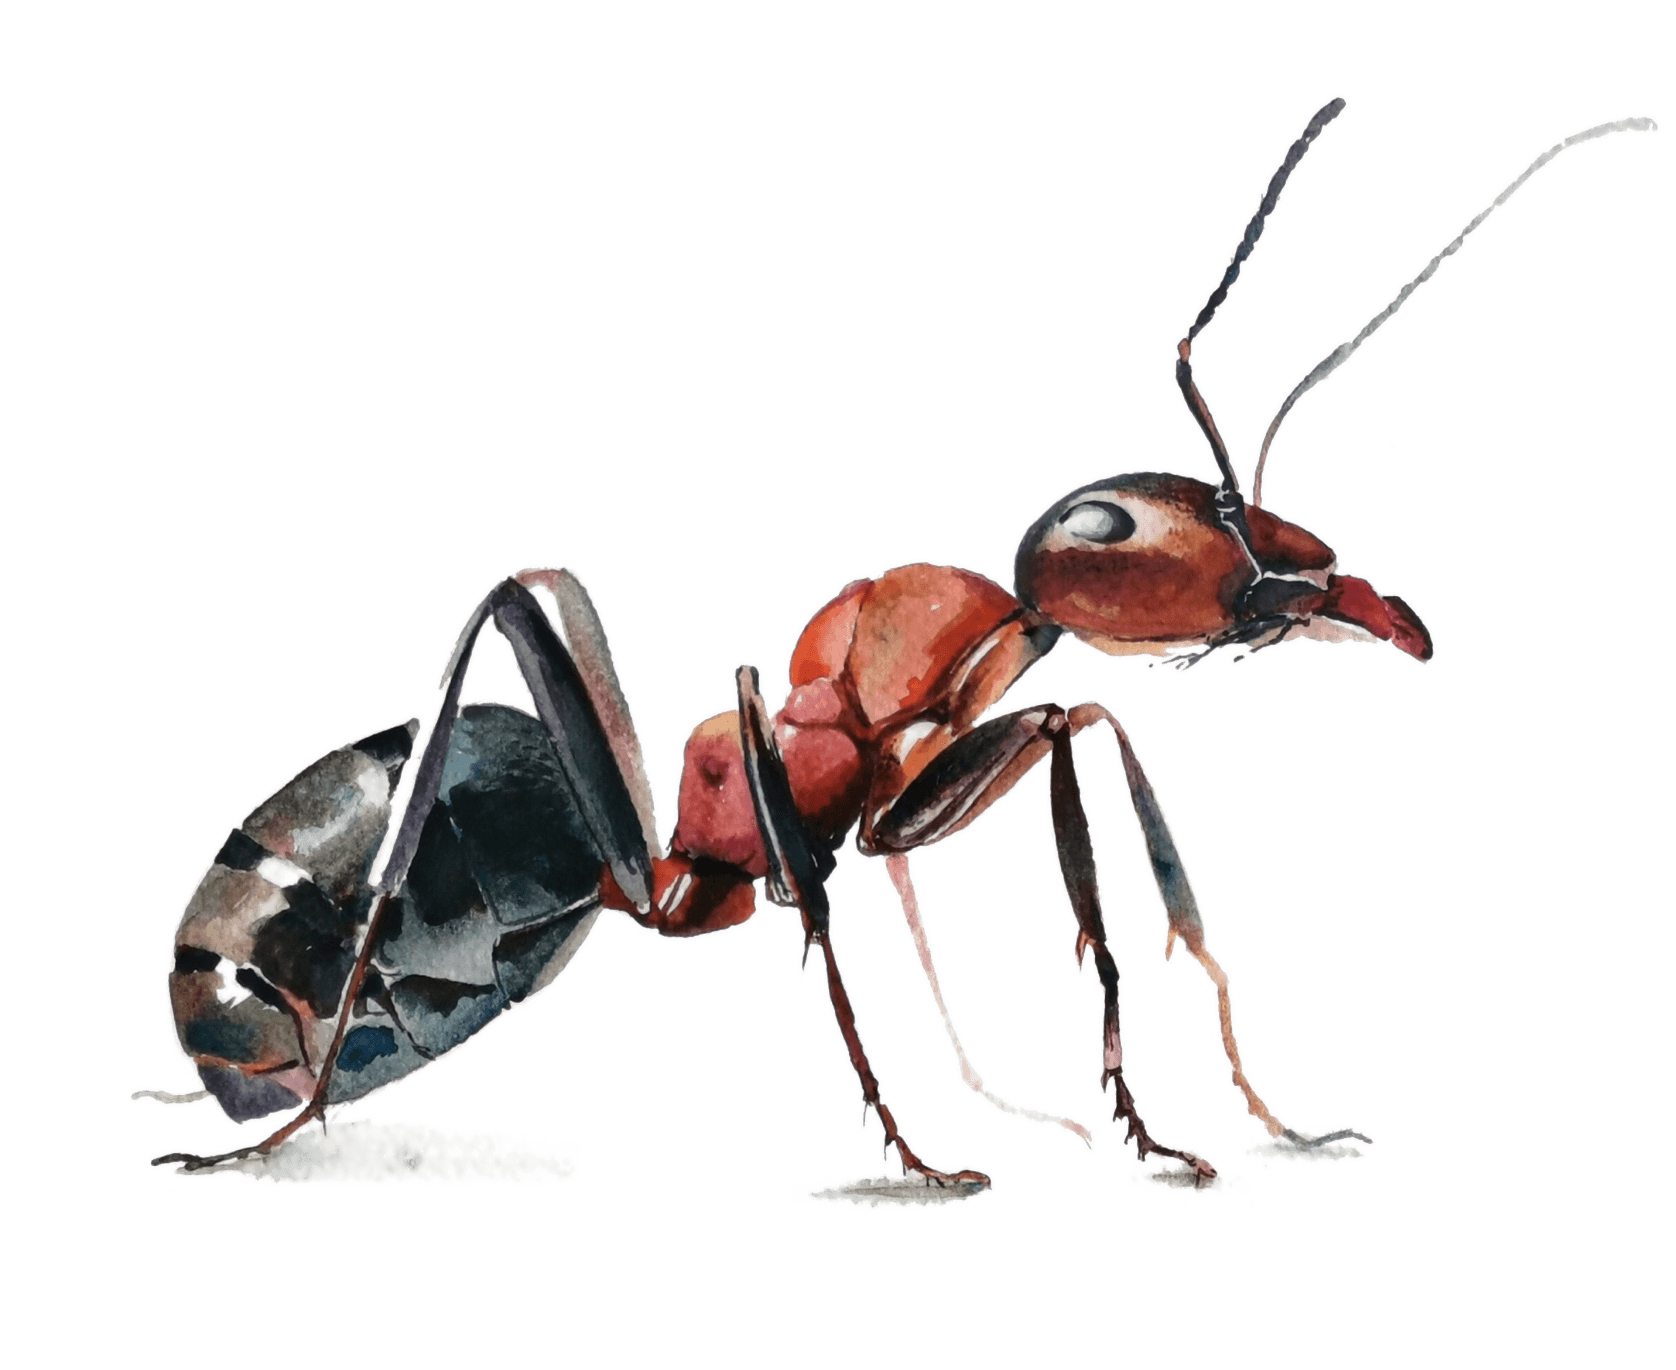 Ant image